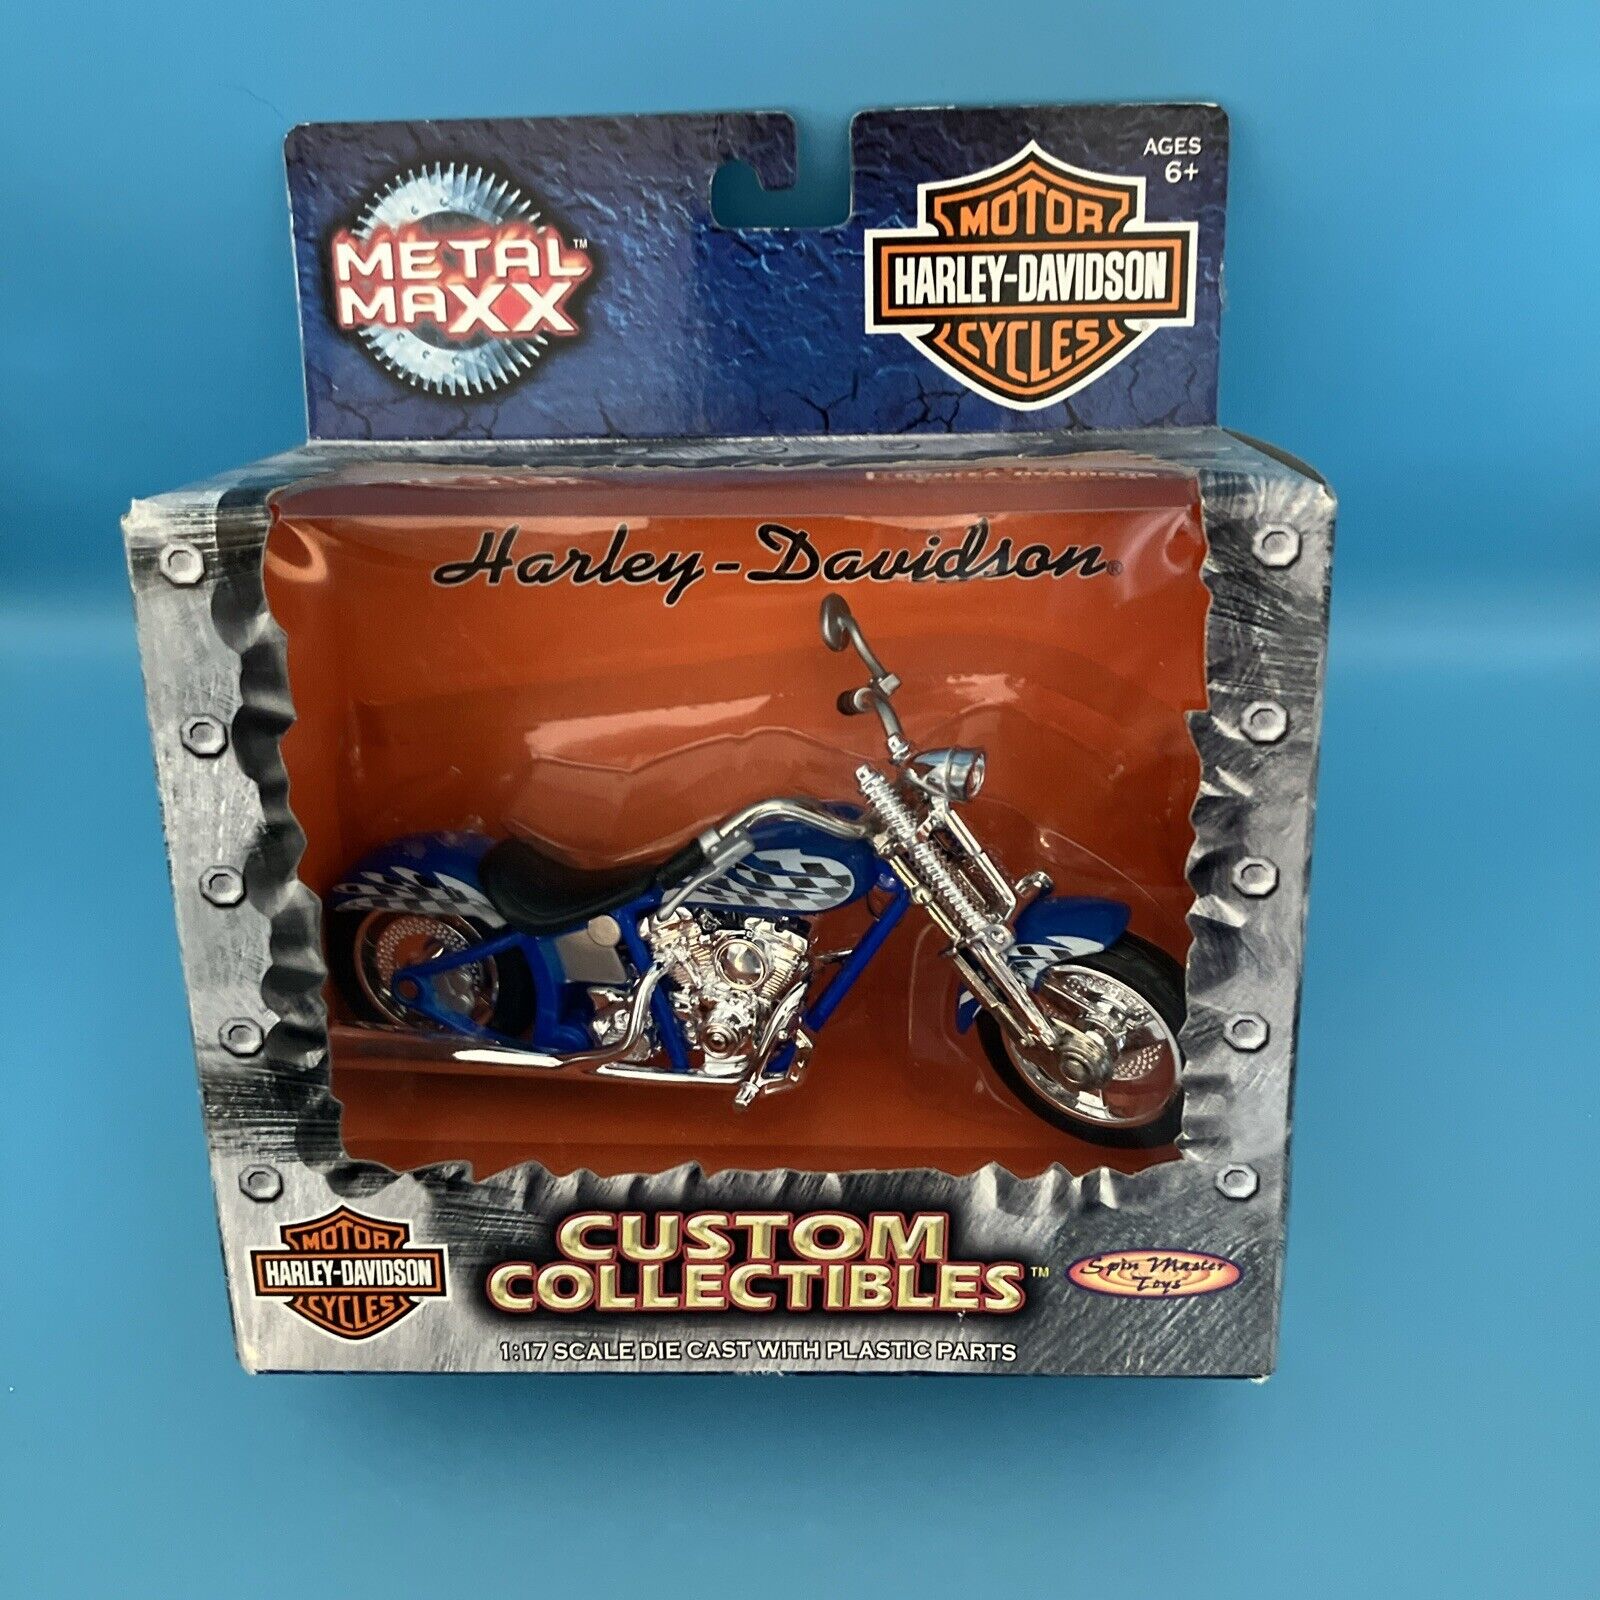 Maisto Harley Davidson 1:18 1997 Bad Boy Die Cast Replica Motorcycle Series 18